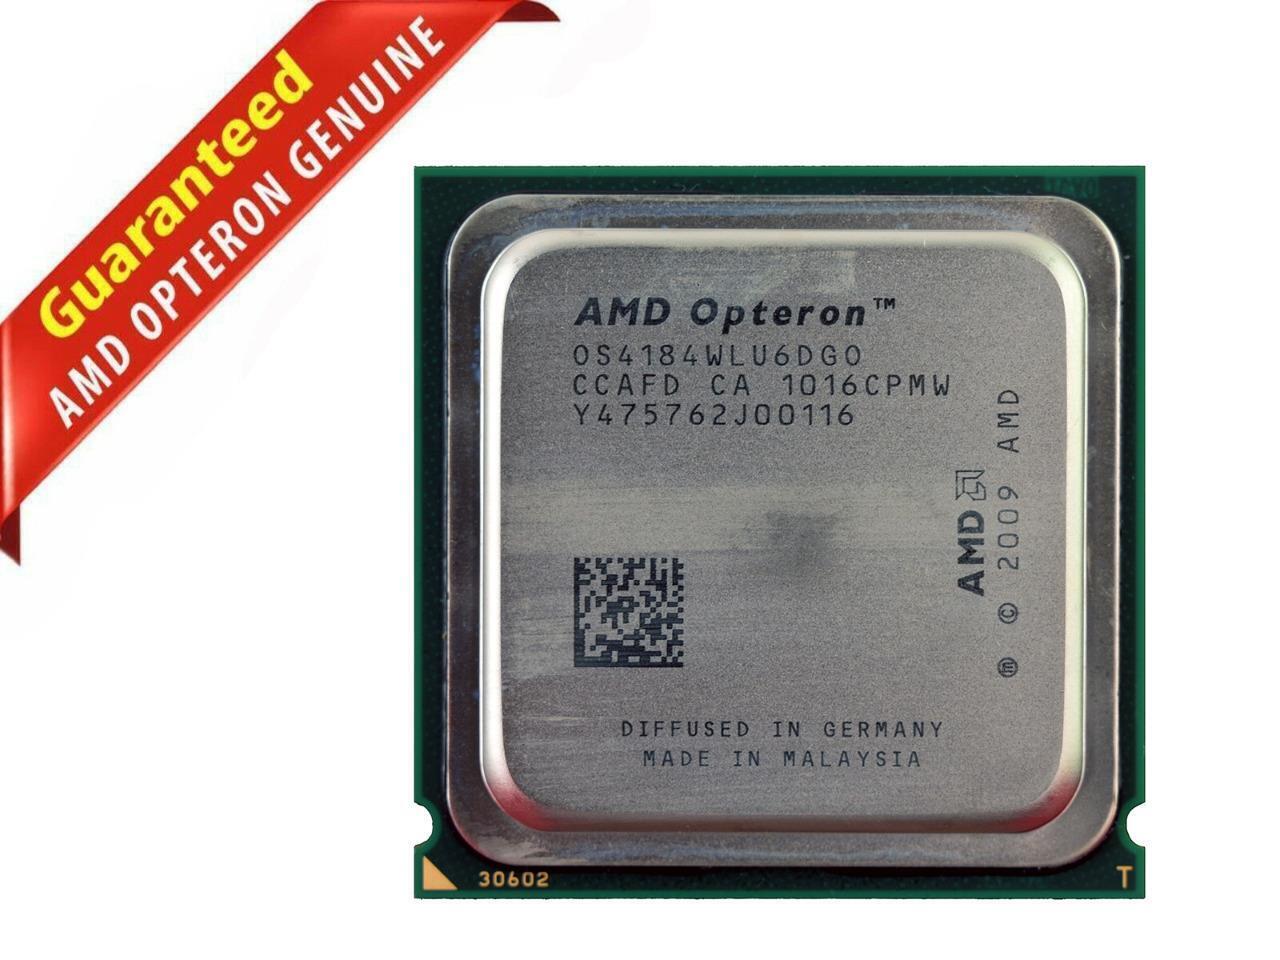 New AMD Opteron 4184 1J6TM OS4184WLU6DGO 2.8 GHz Six Core CPU Processor